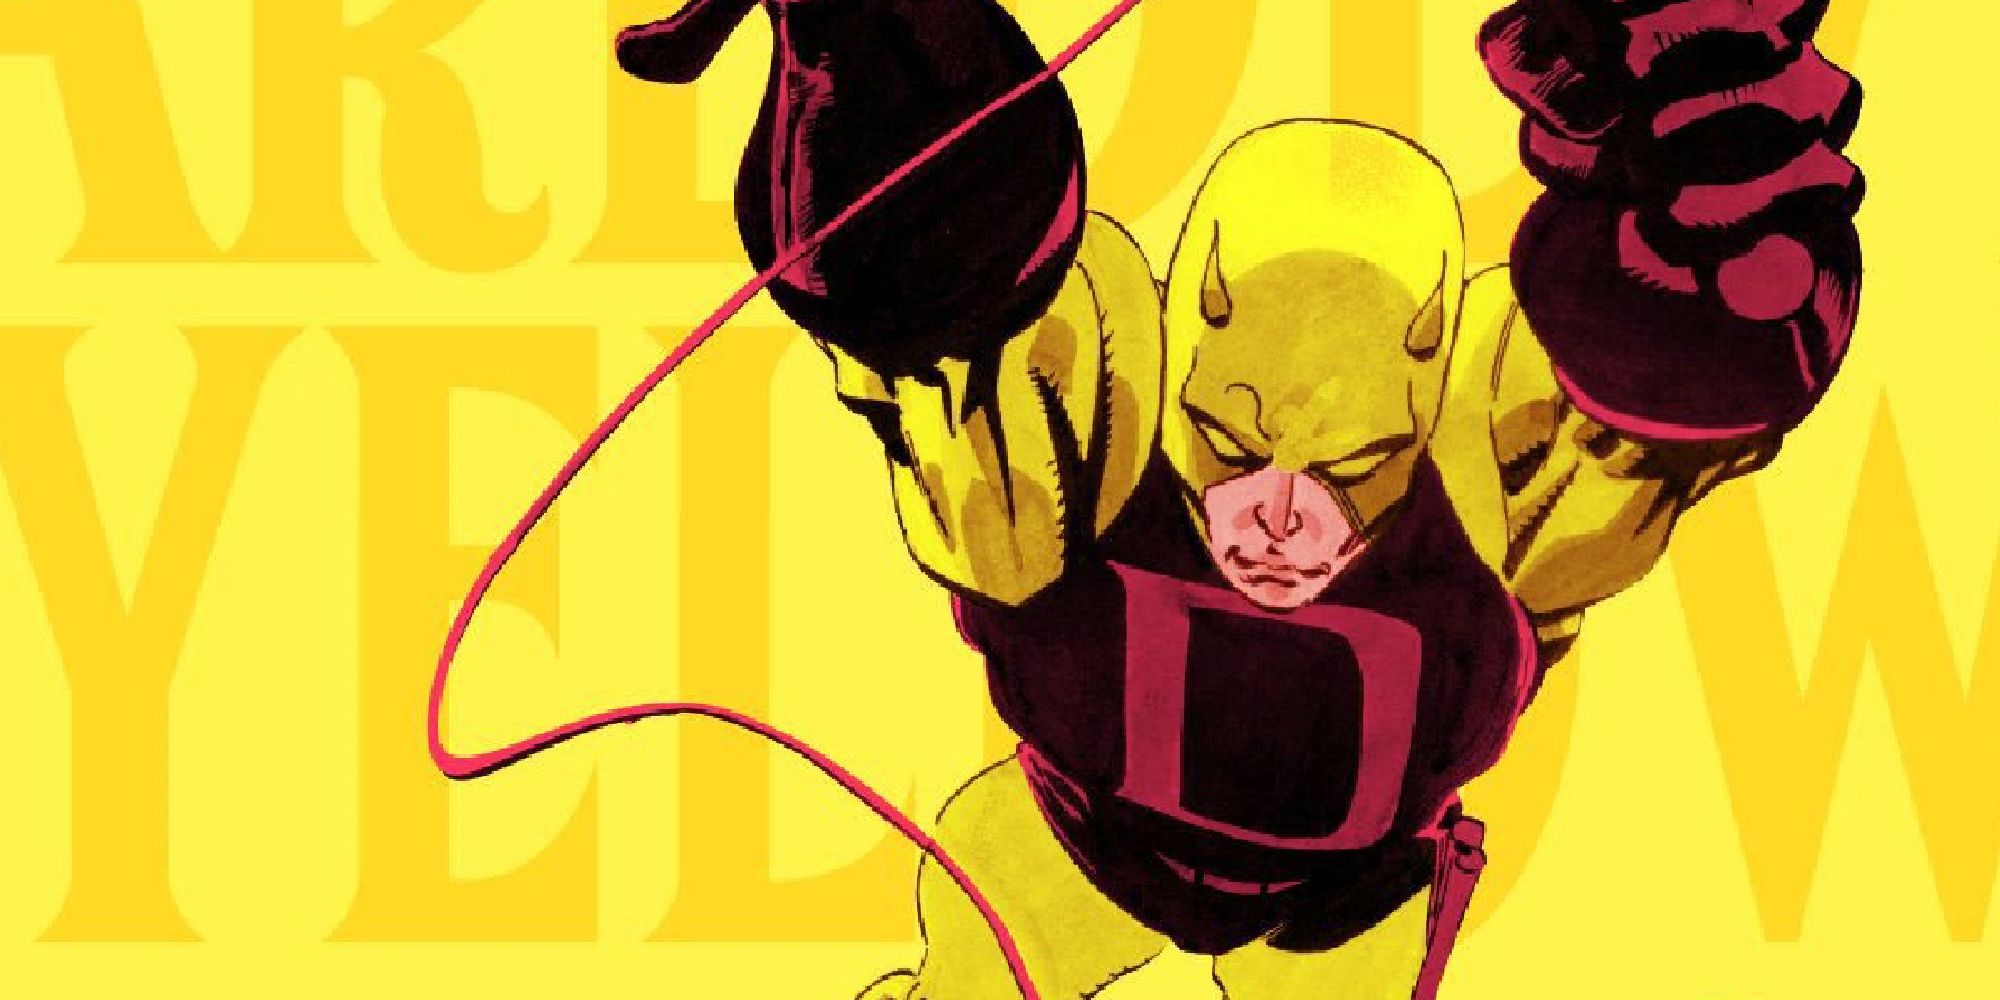 Daredevil leaps into action in Marvel Comics.